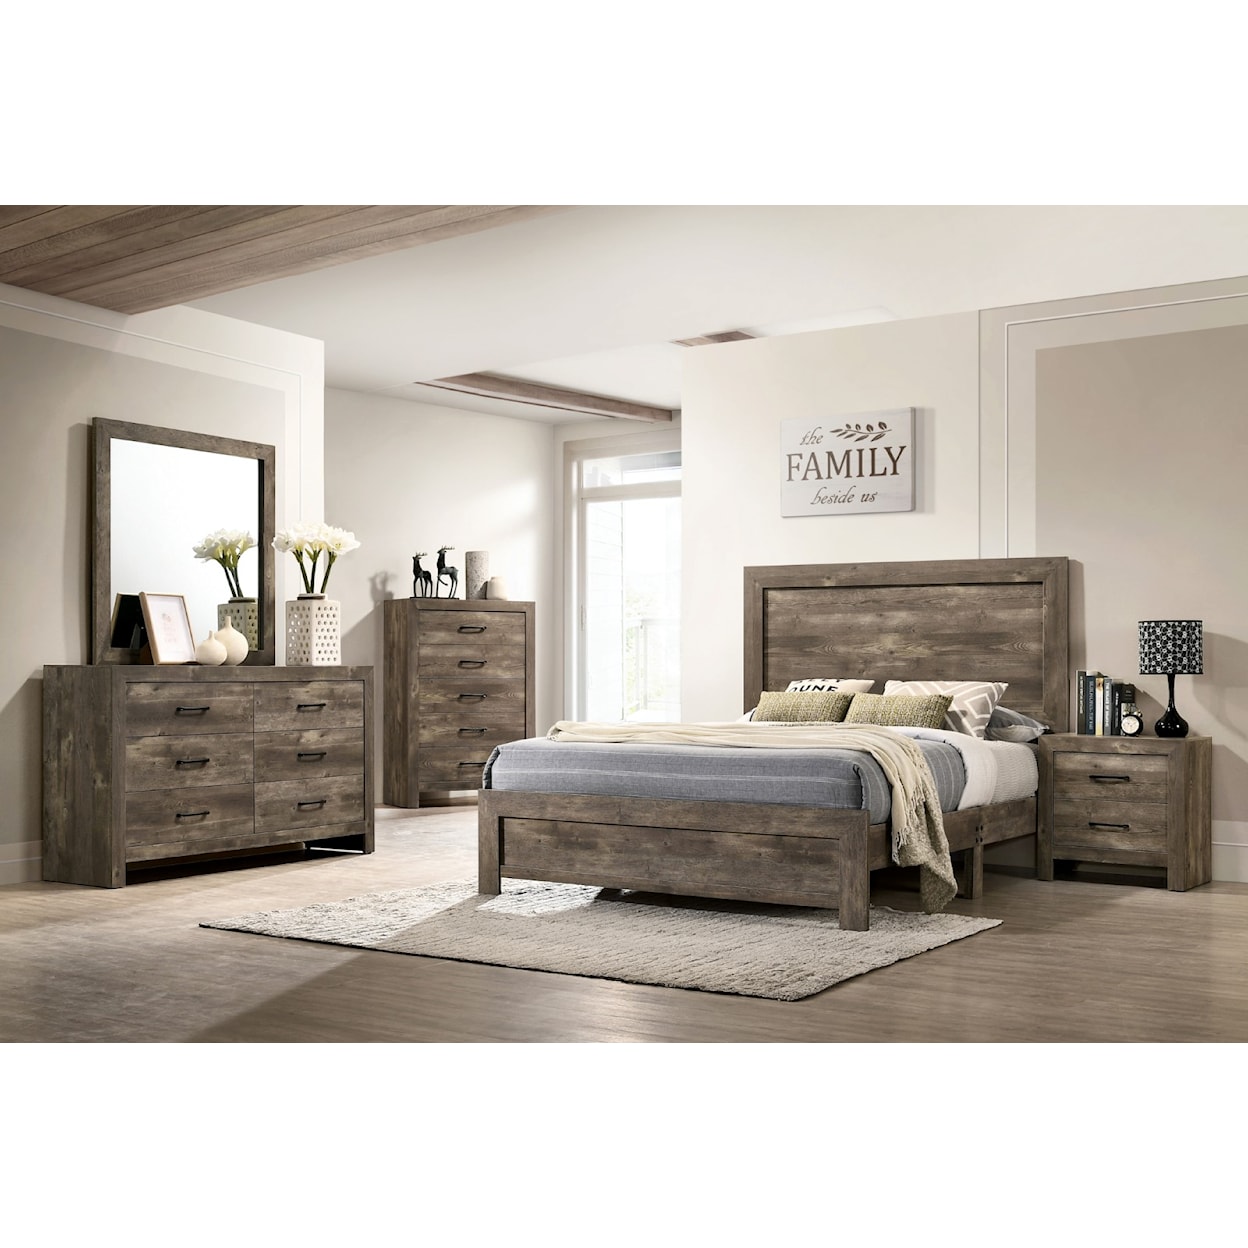 Furniture of America Larissa Cal King Bed